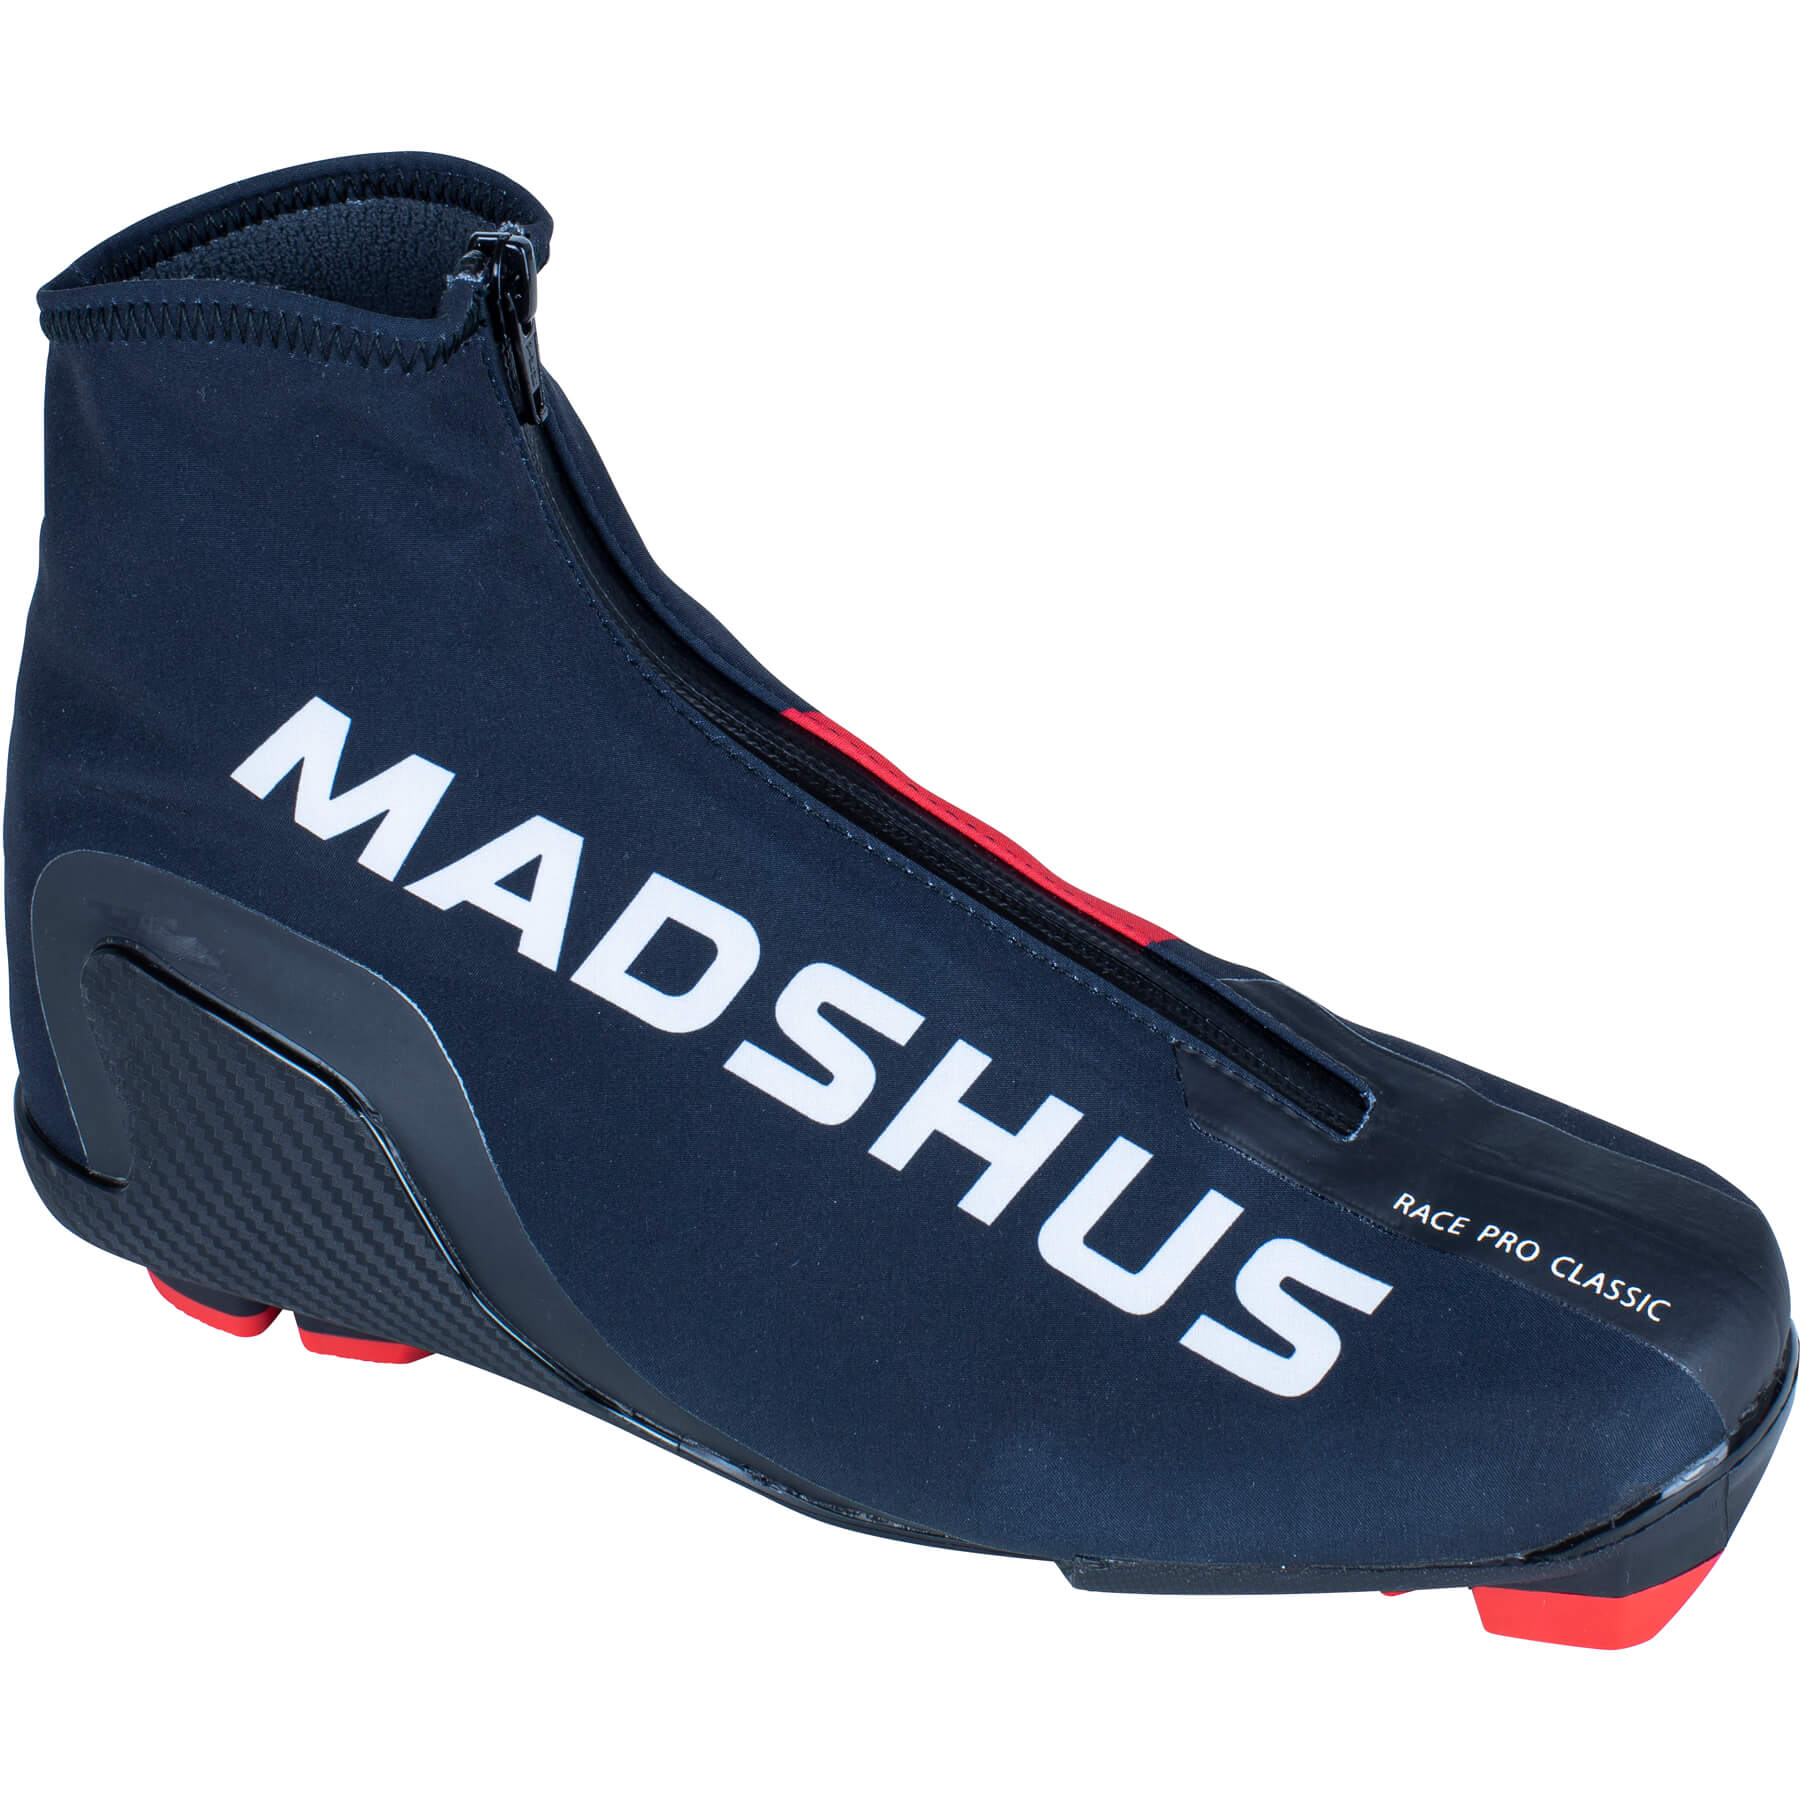 Madshus Race Pro Classic Boot - 0